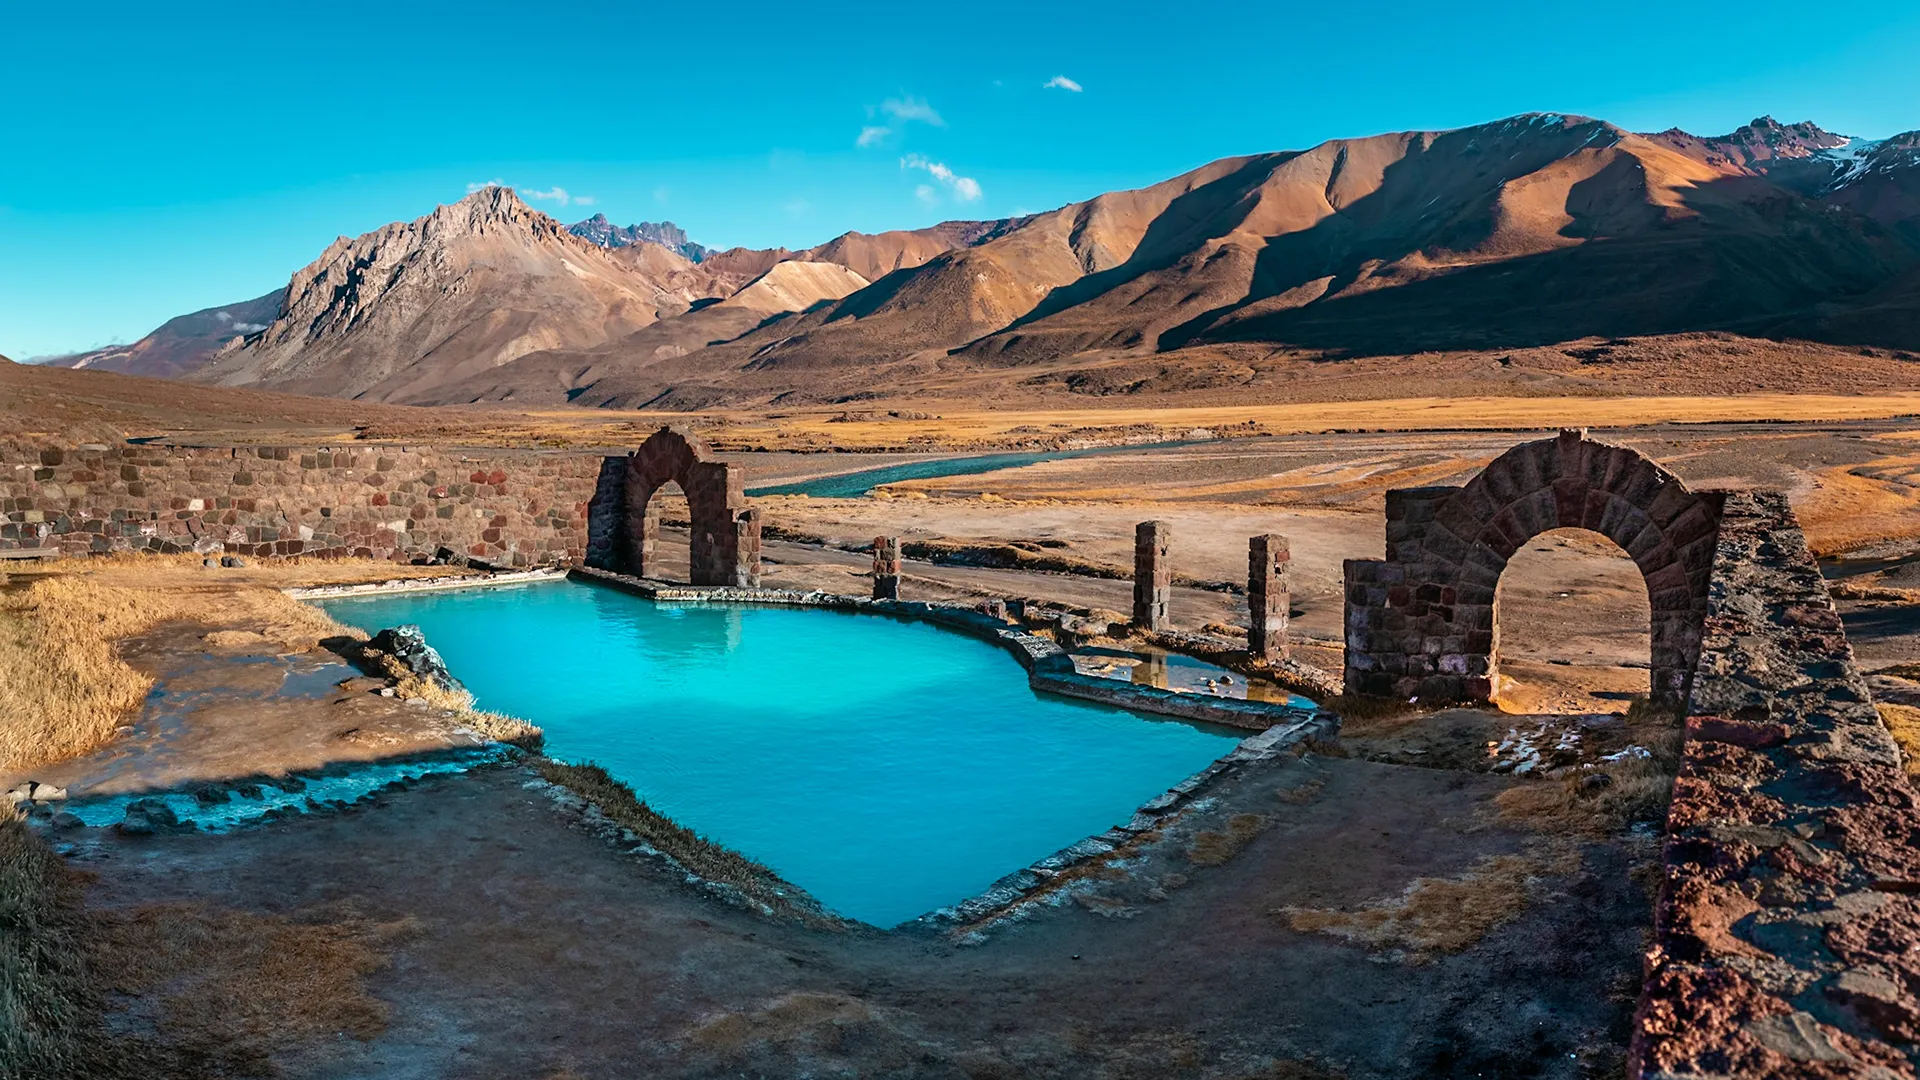 Hotel Termas del Sosneado in Argentina, South America | Hot Springs & Pools - Rated 0.8